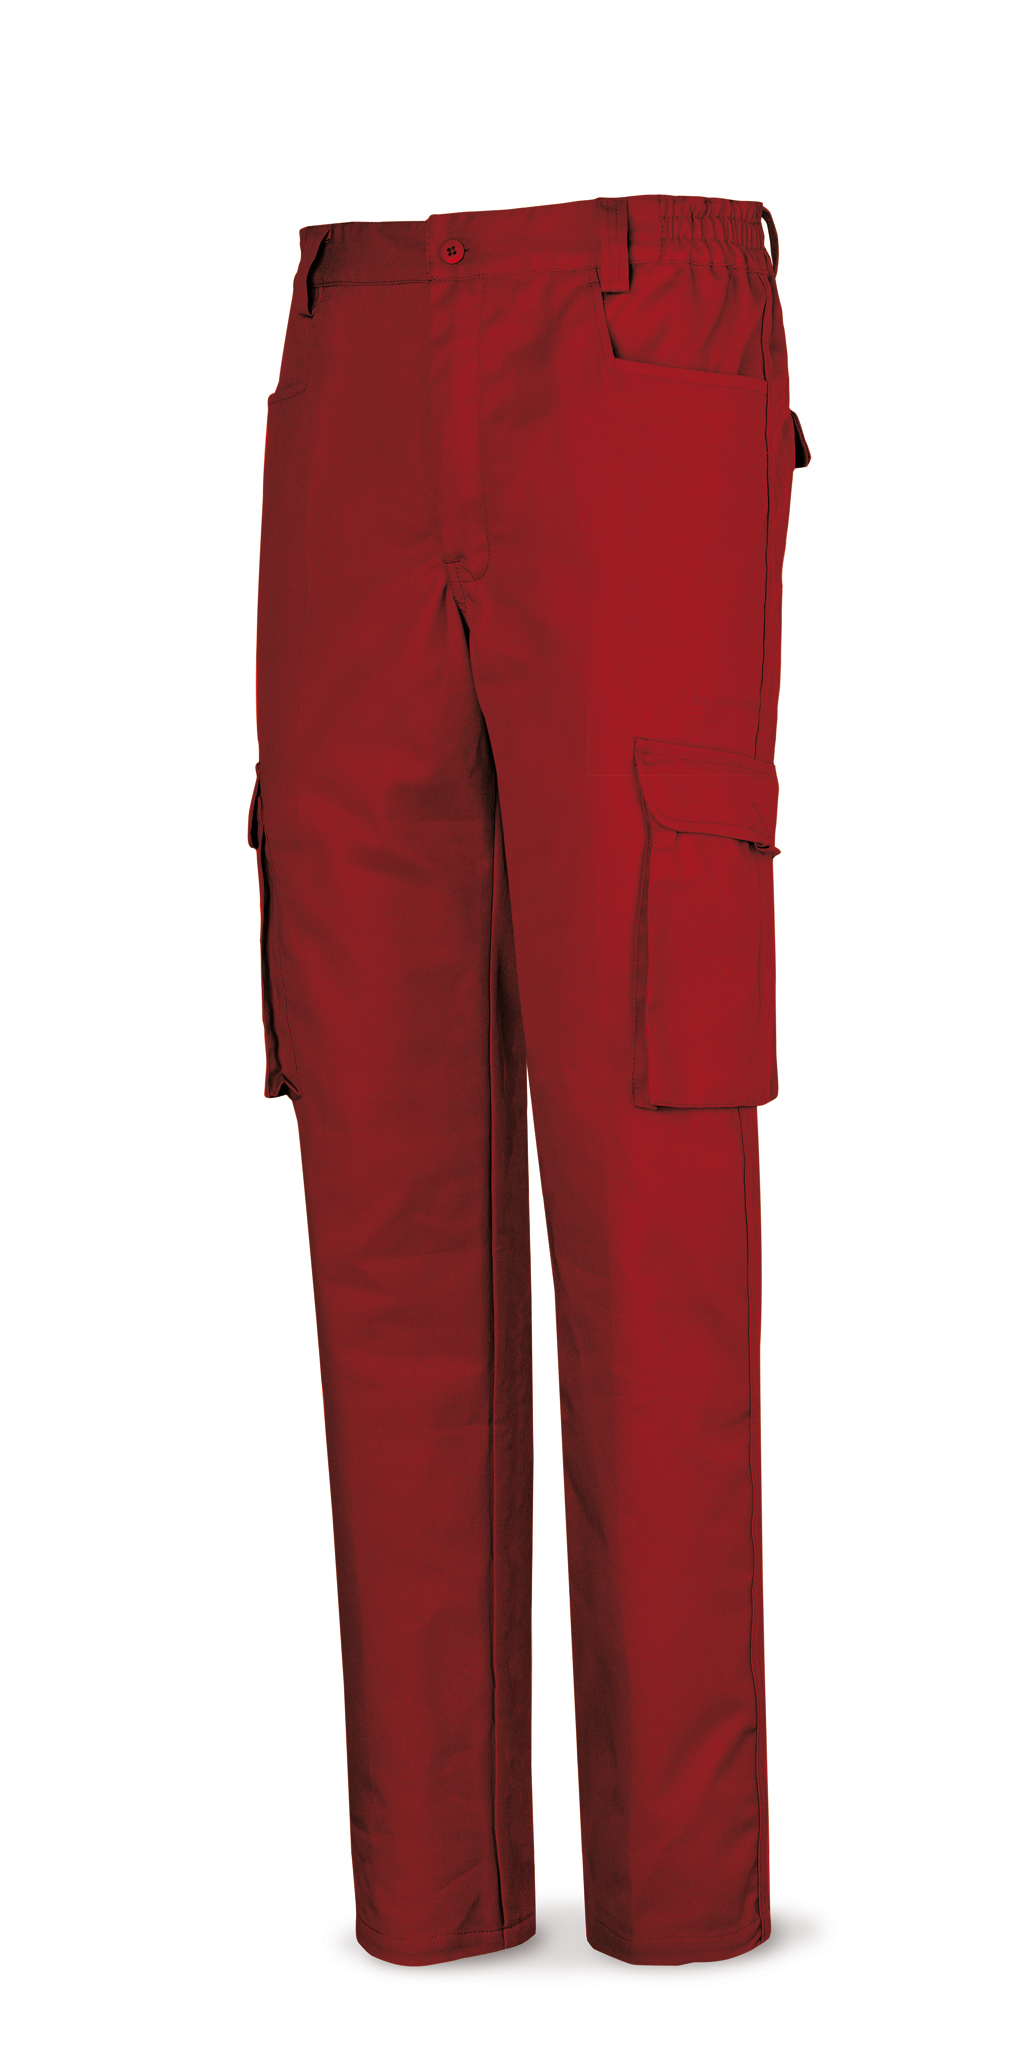 488-PR Top Vestuario Laboral Serie Top Pantalón rojo poliester/algodón de 245 g. Multibolsillo